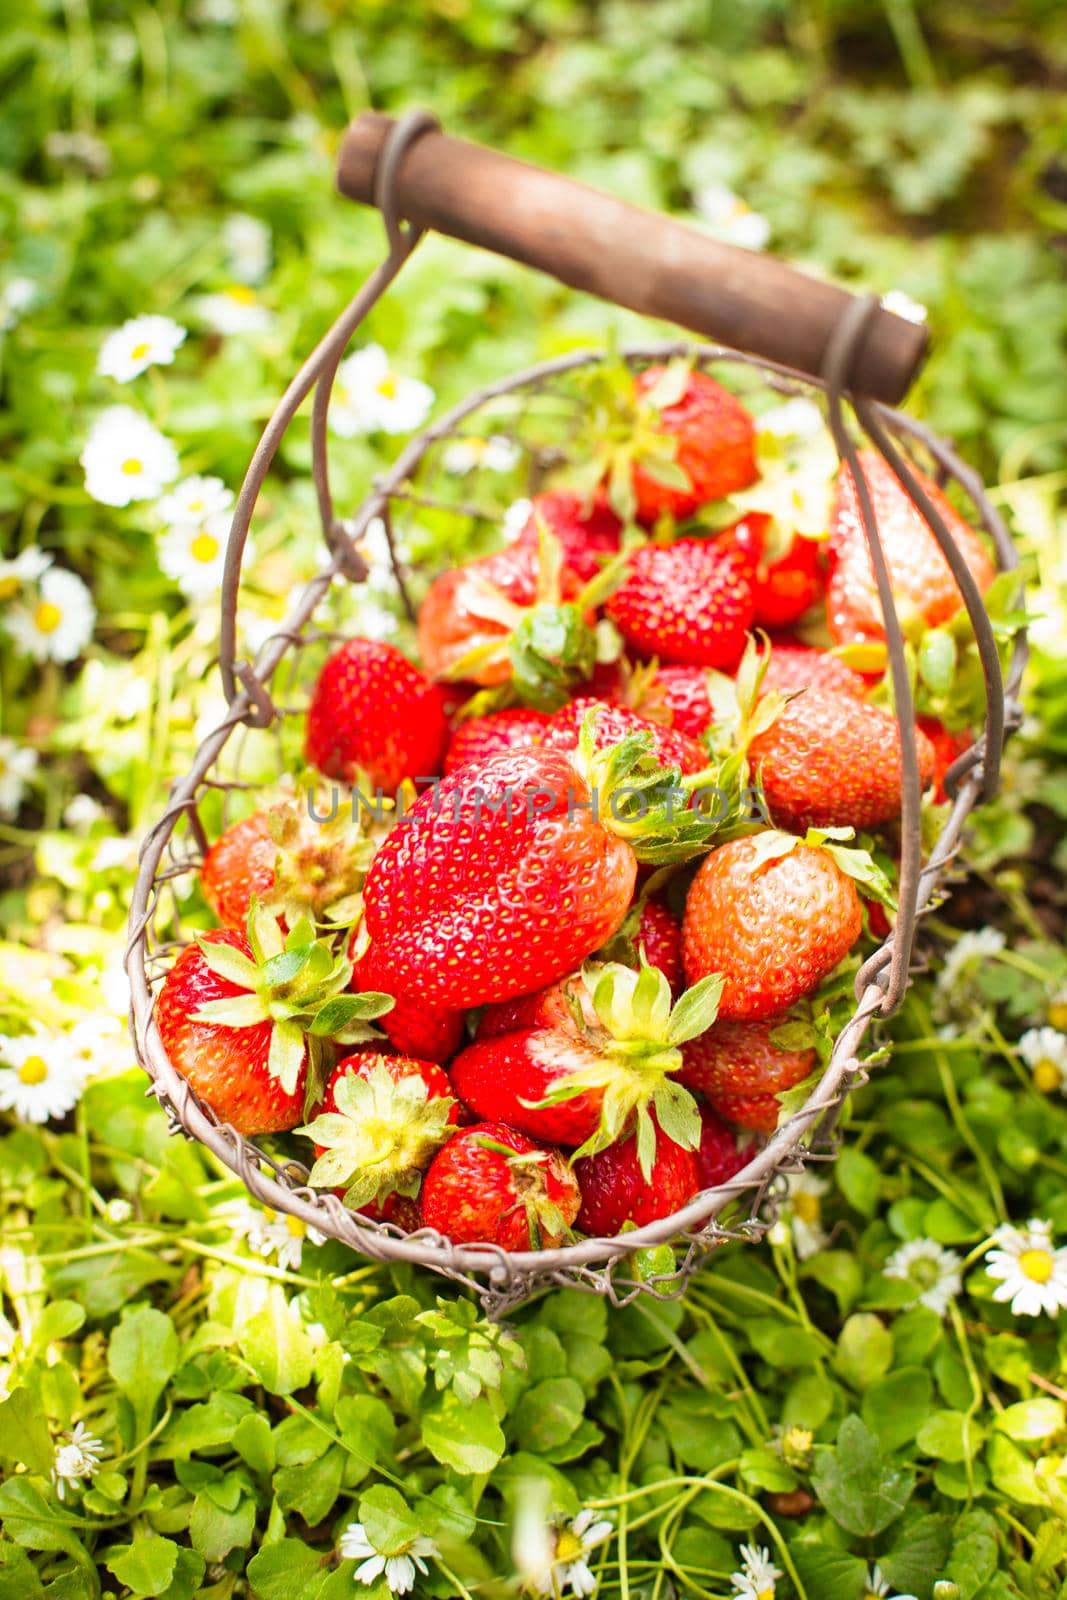 Fresh farm strawberries in a basket on the lawn